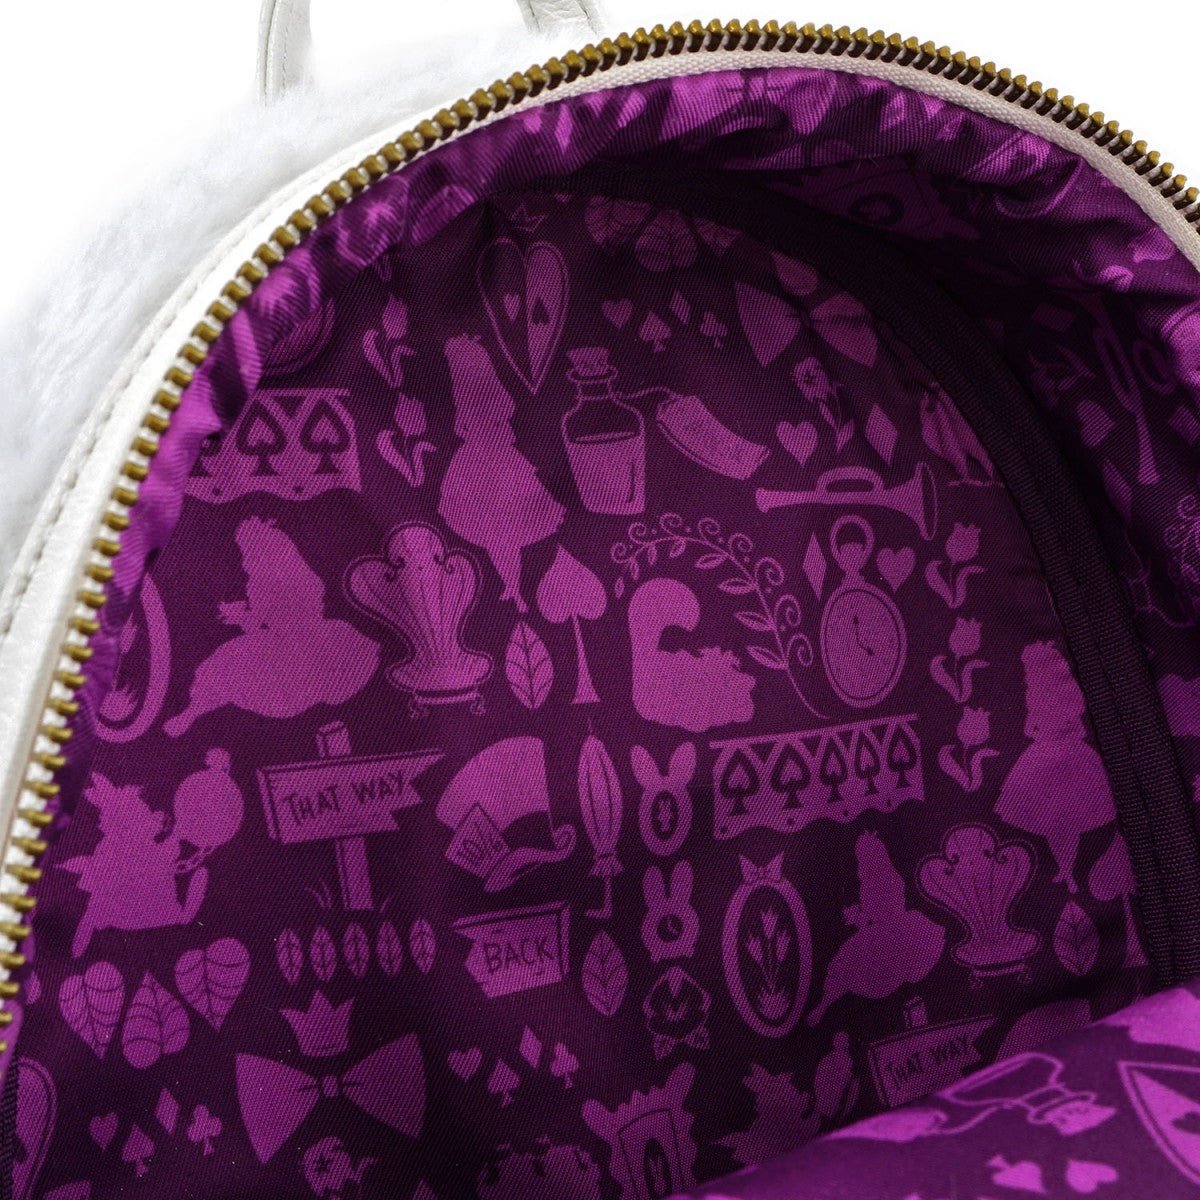 Loungefly X Disney Alice in Wonderland White Rabbit Cosplay Mini Backpack - GeekCore